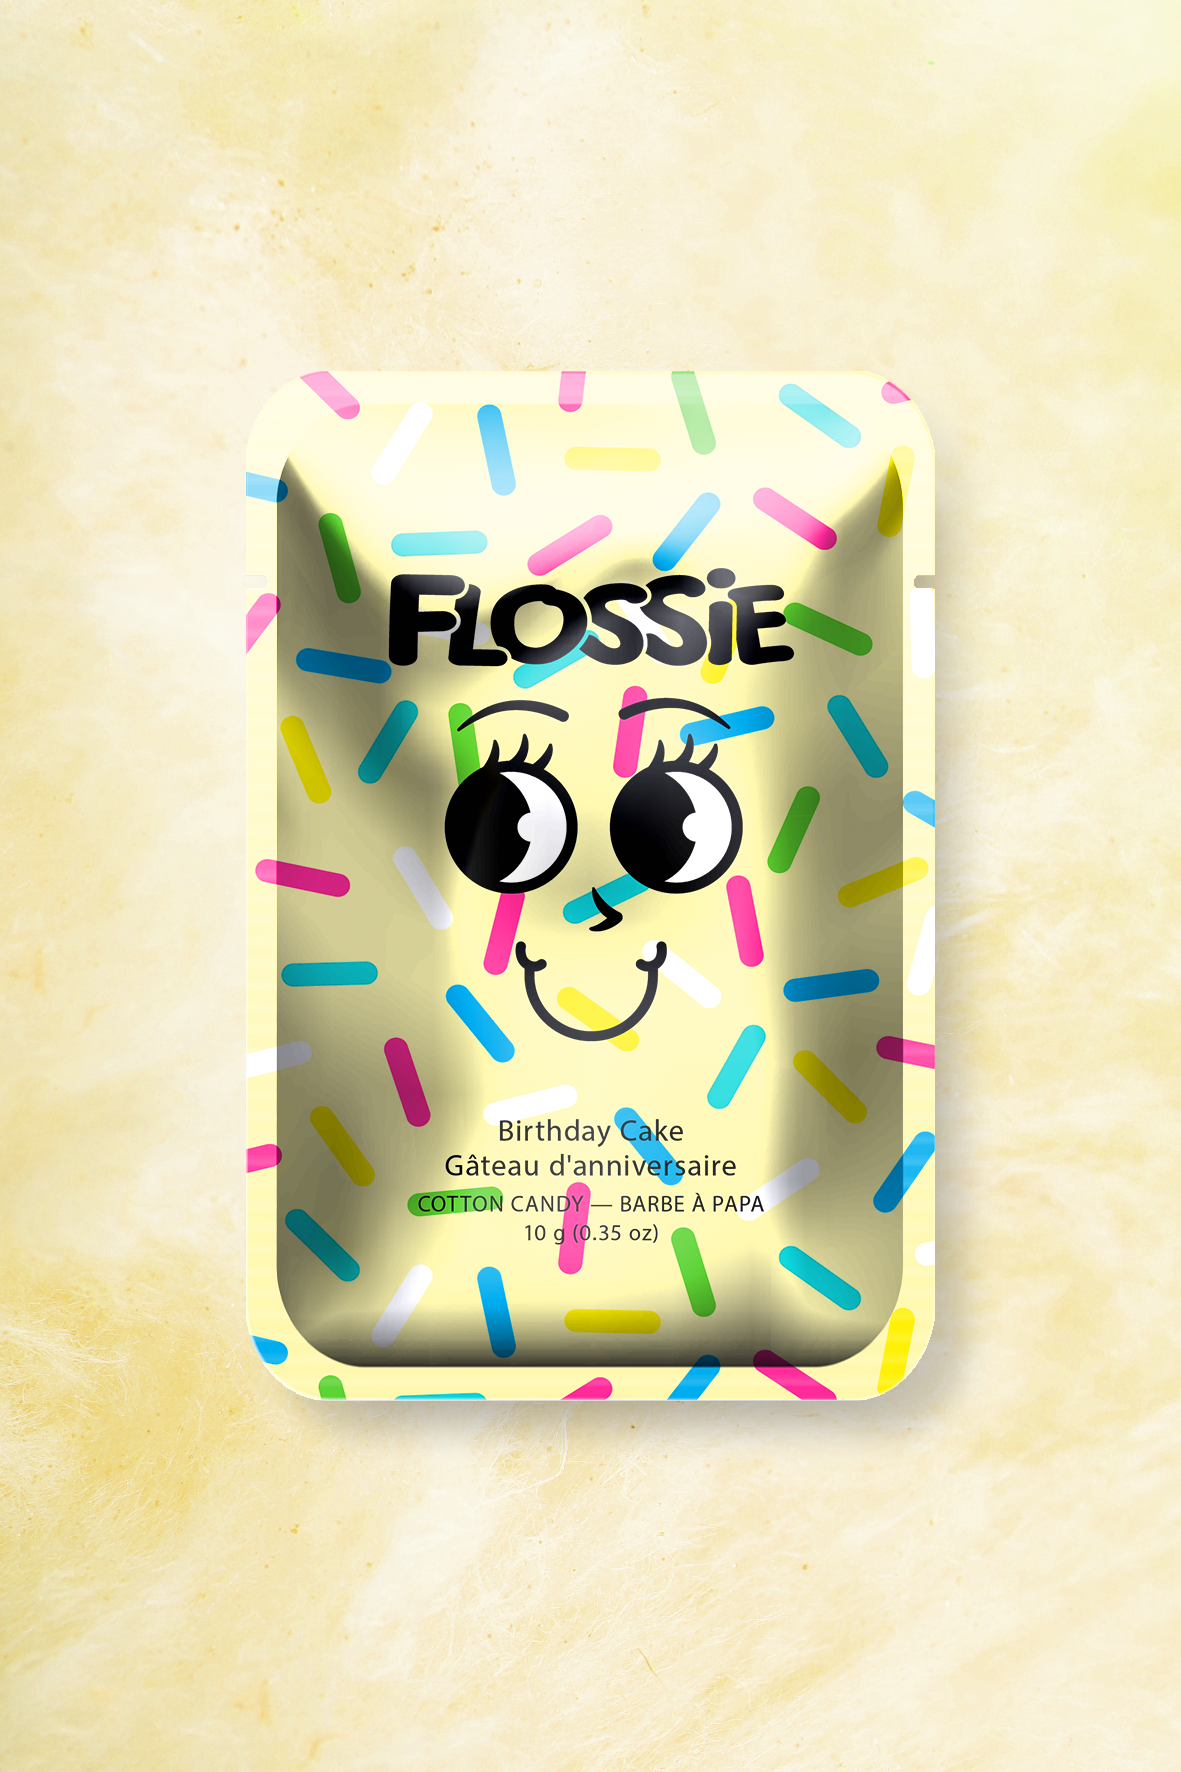 Flossie - Birthday Cake Cotton Candy